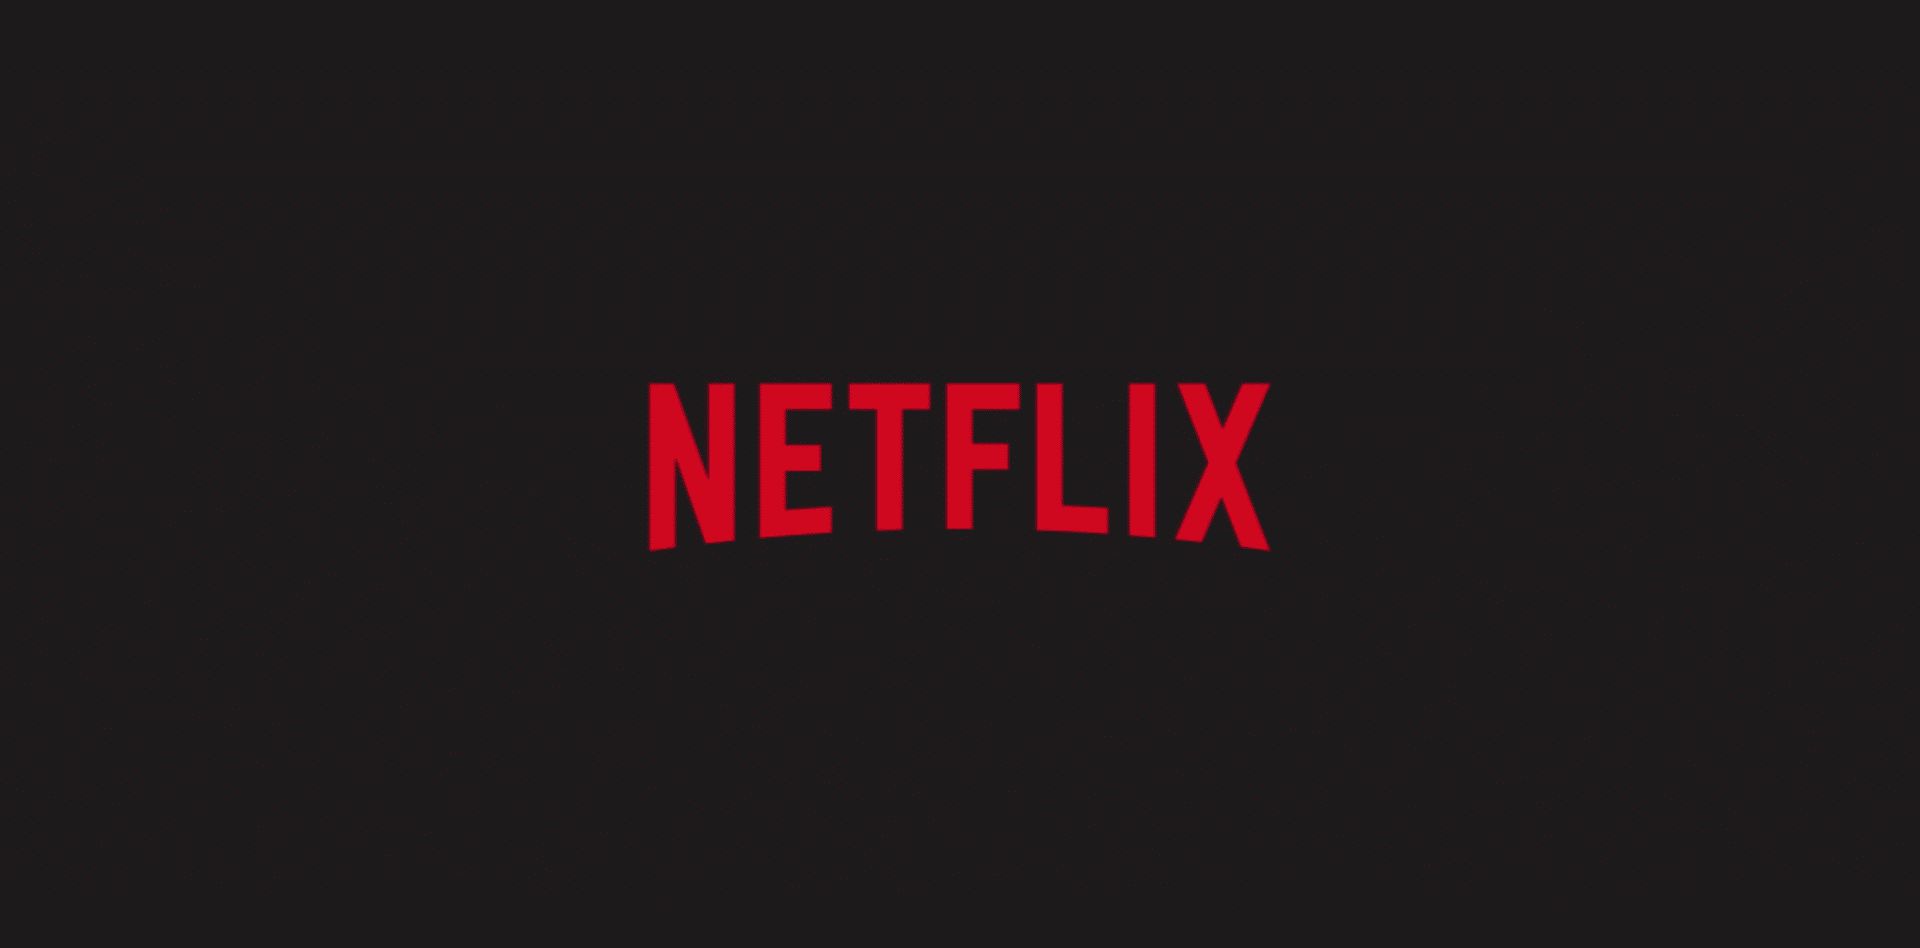 Netflix South Africa February 2021 shuffle June 2020 Screen Lock